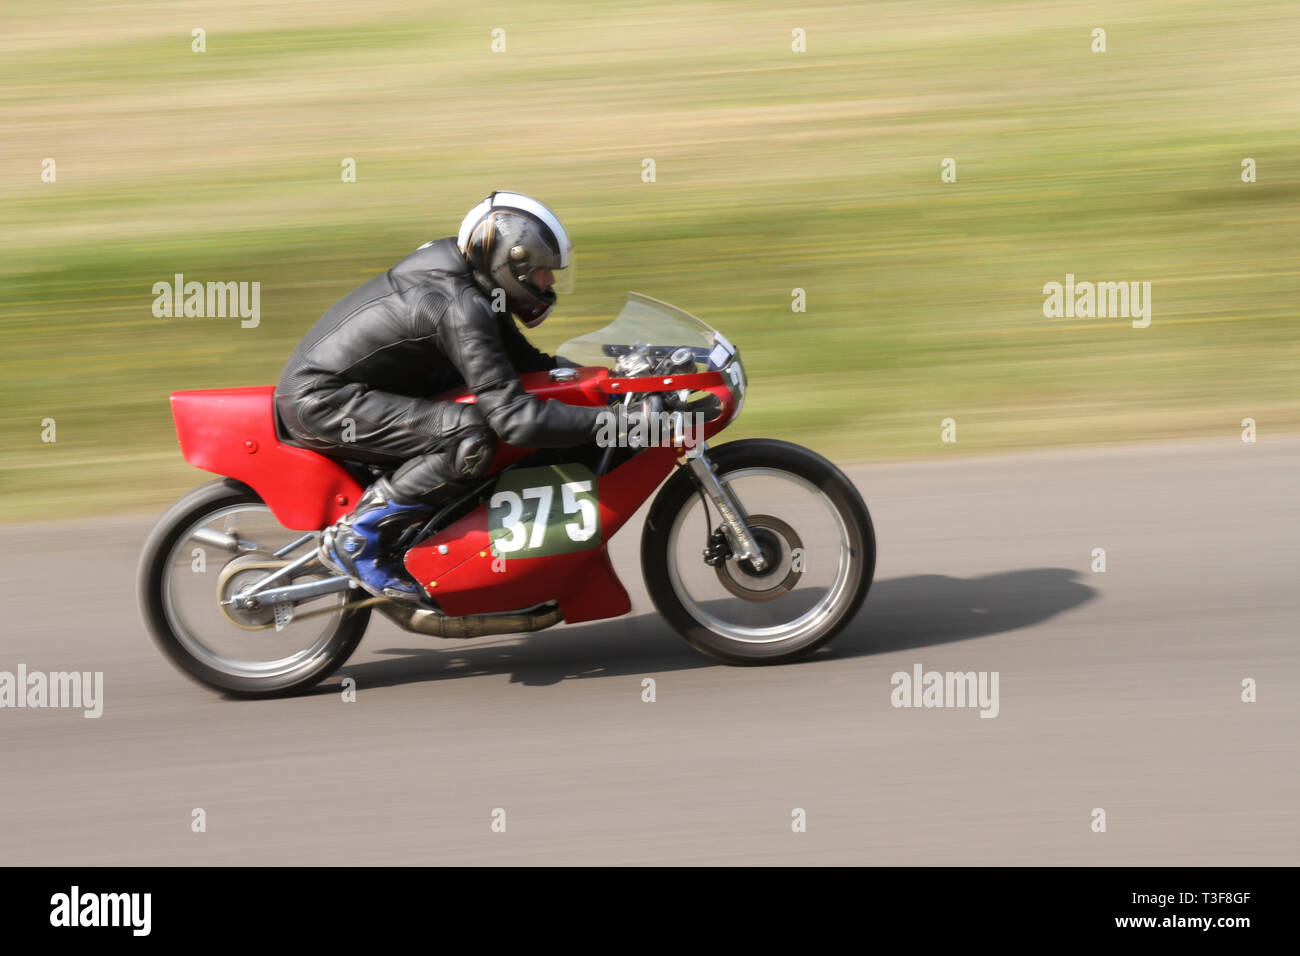 Chorley, Lancashire, Reino Unido. Abril de 2019. Hoghton Tower 43rd Motocicleta Sprint. Rider 375 Edward Elder de Barrow en Furness montando una 1979 175cc Rotax 175 Motocicleta a la velocidad. Foto de stock